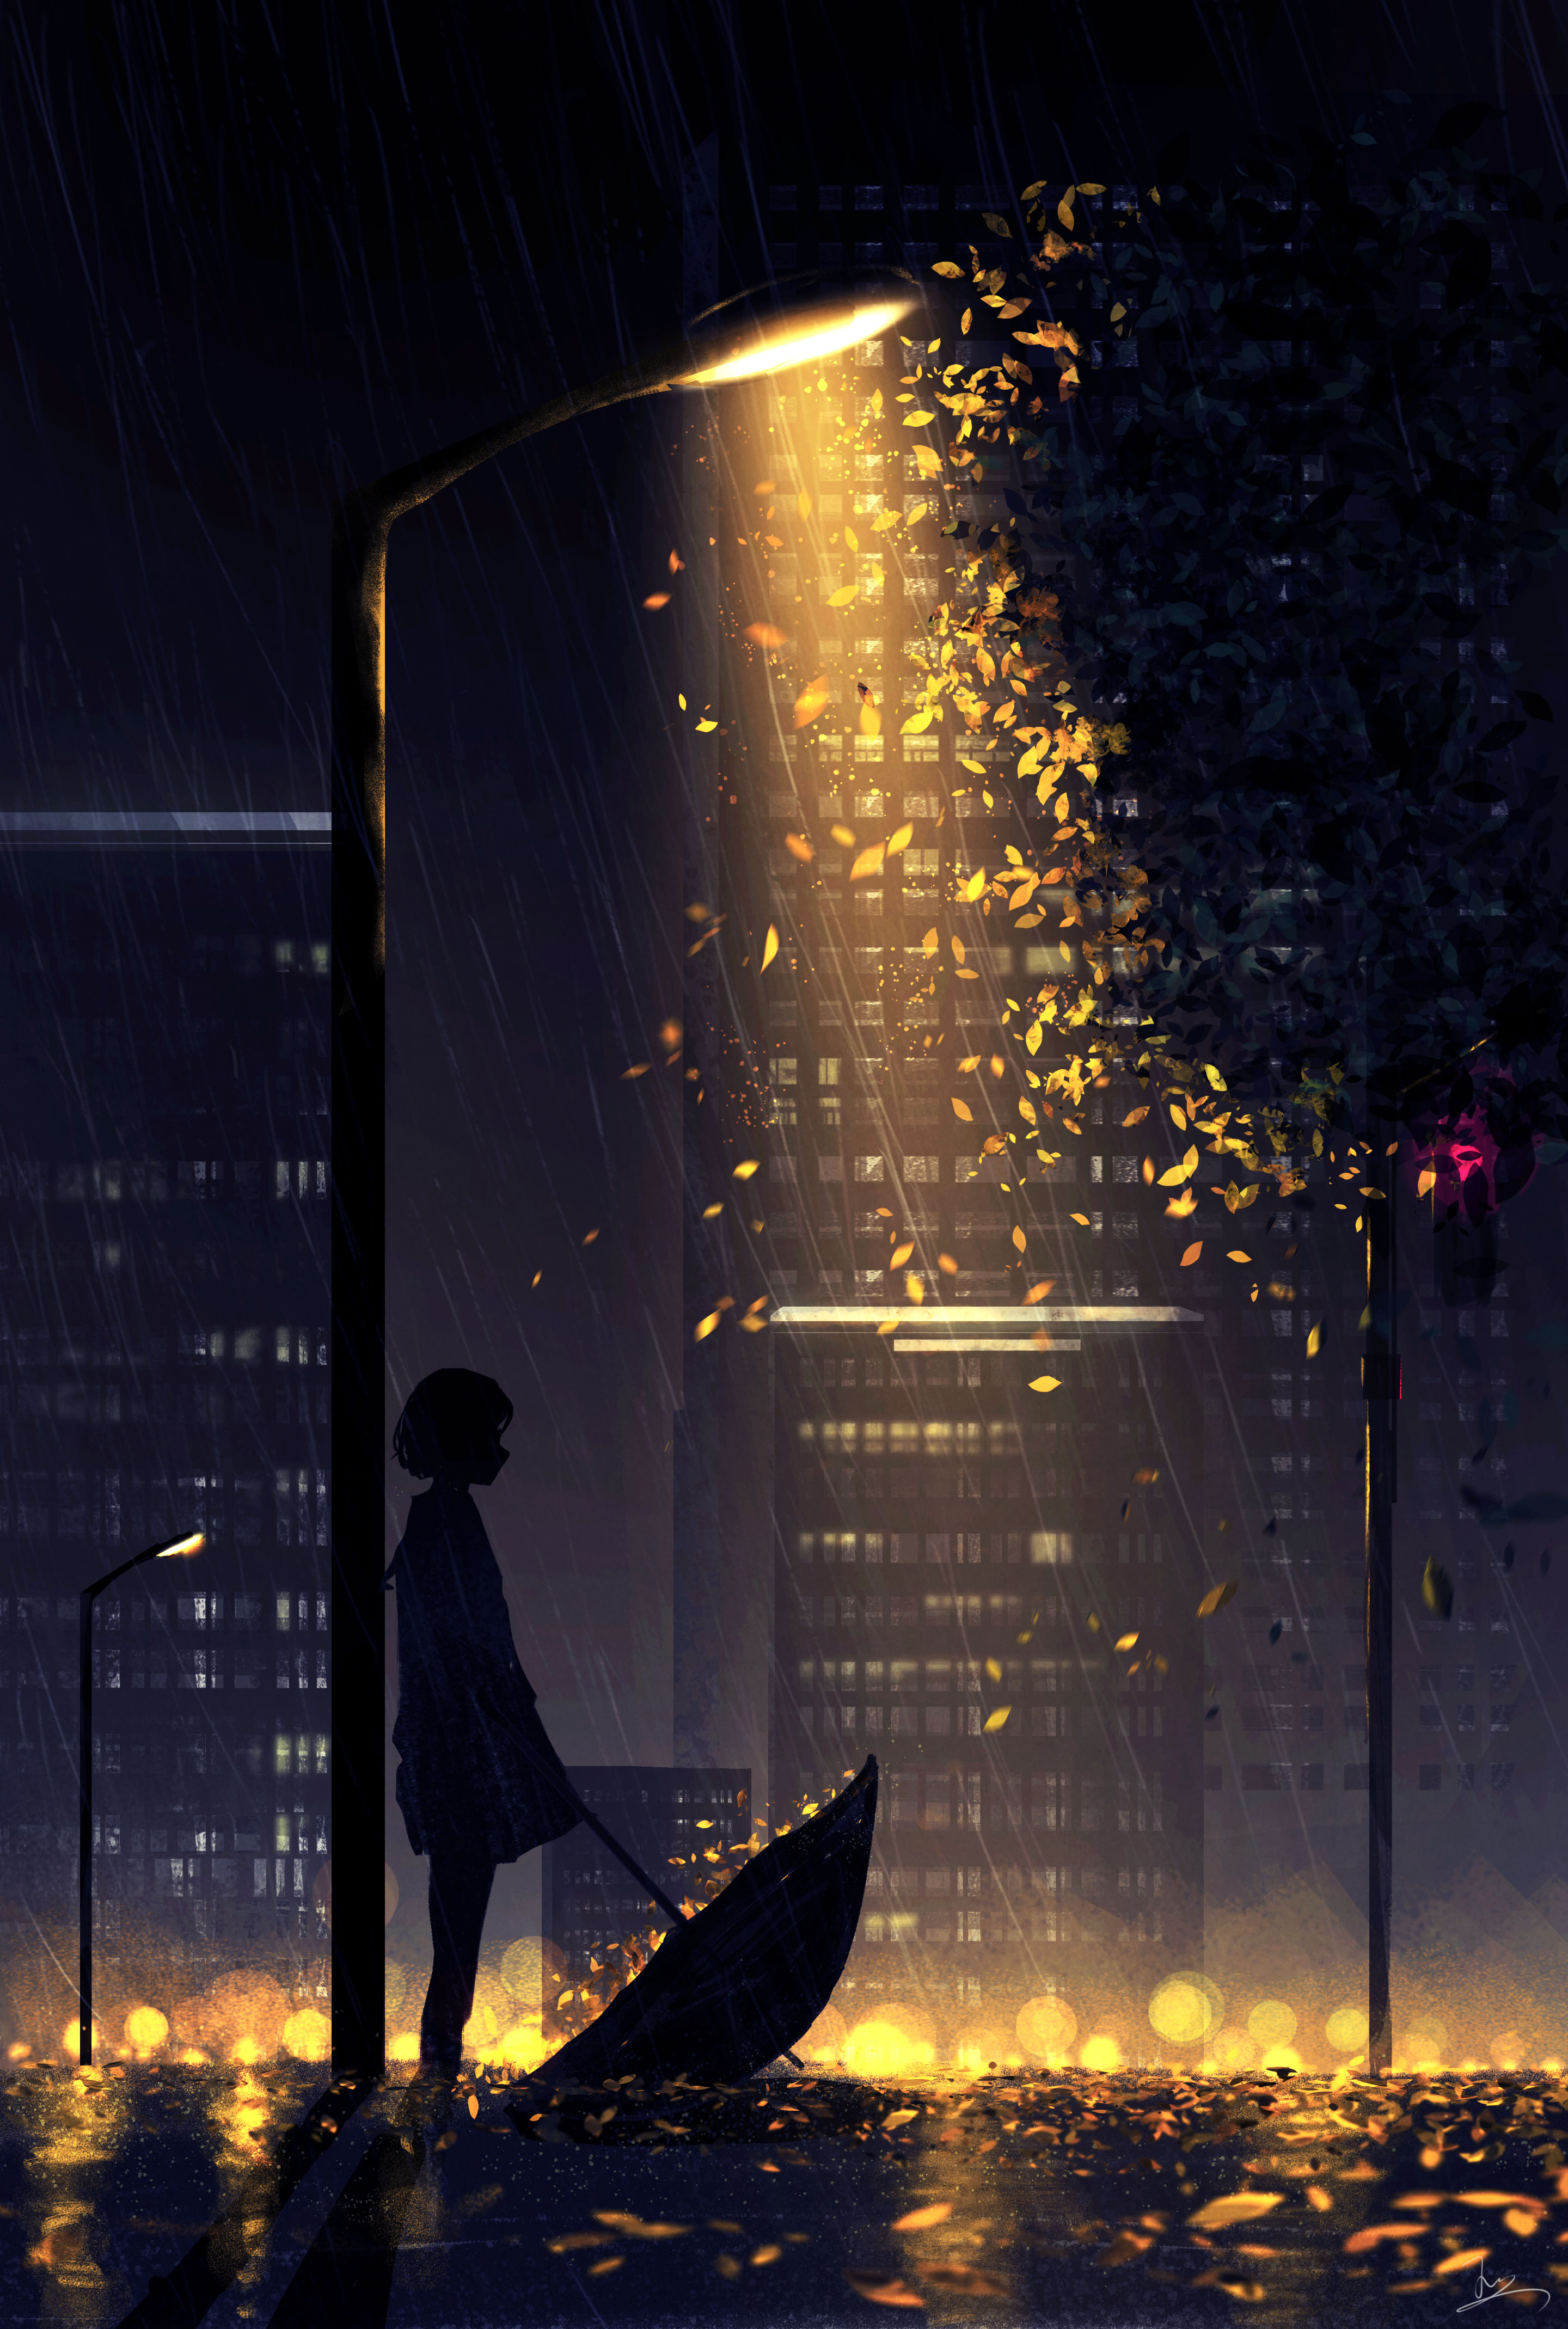 Anime 2880x4278 HuashiJW silhouette short hair umbrella women outdoors rain city lights signature profile building leaves standing night street